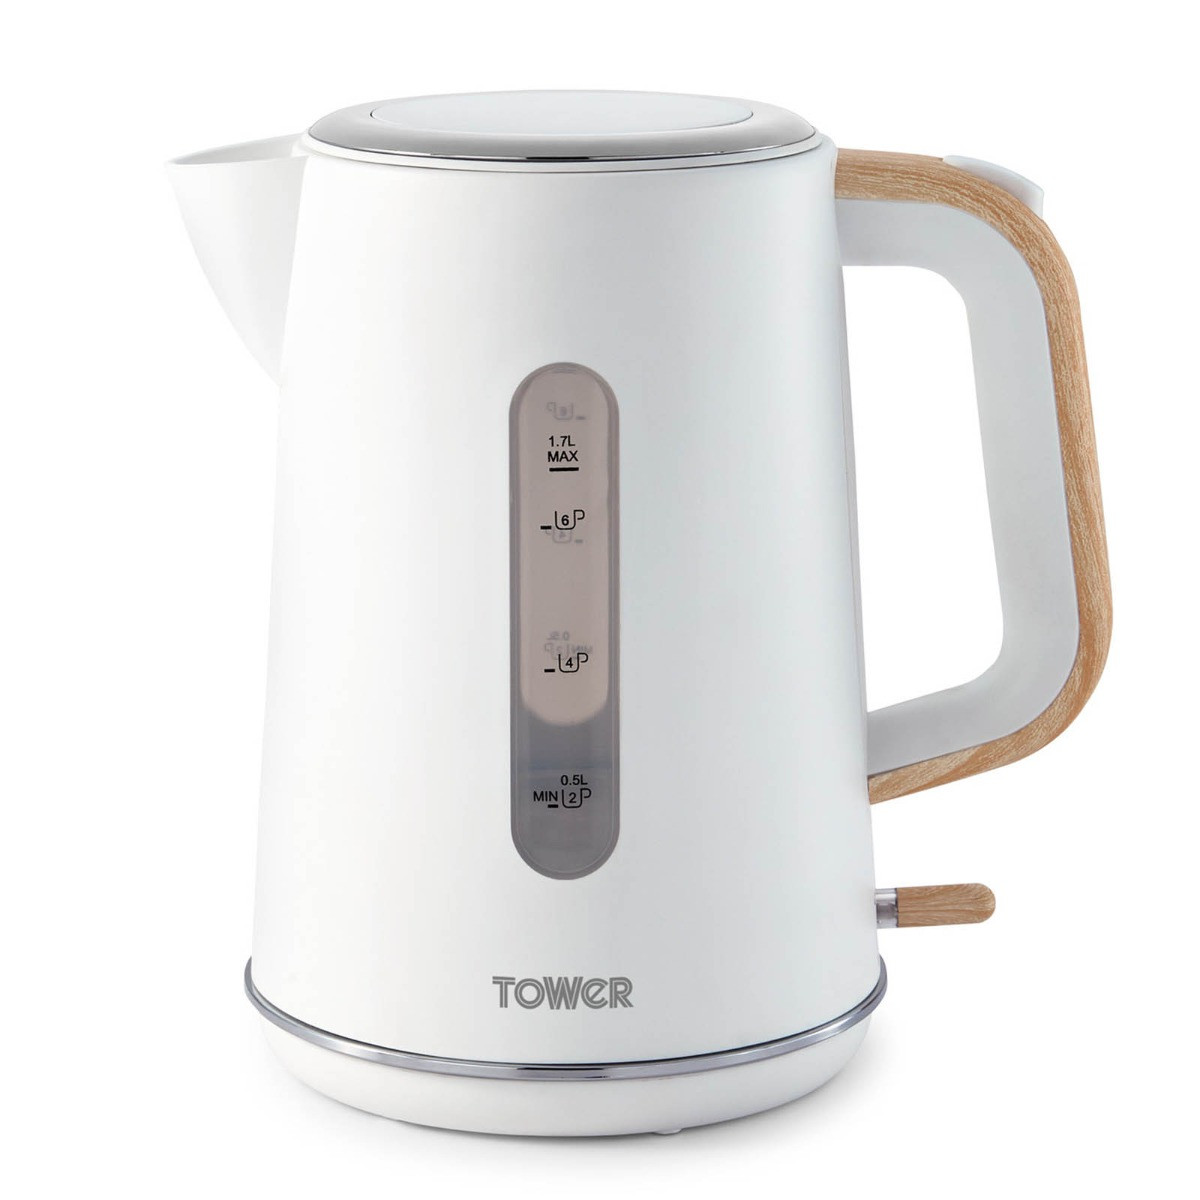 Tower Scandi Rapid Boil Kettle & 2-Slice Toaster Bundle - White>